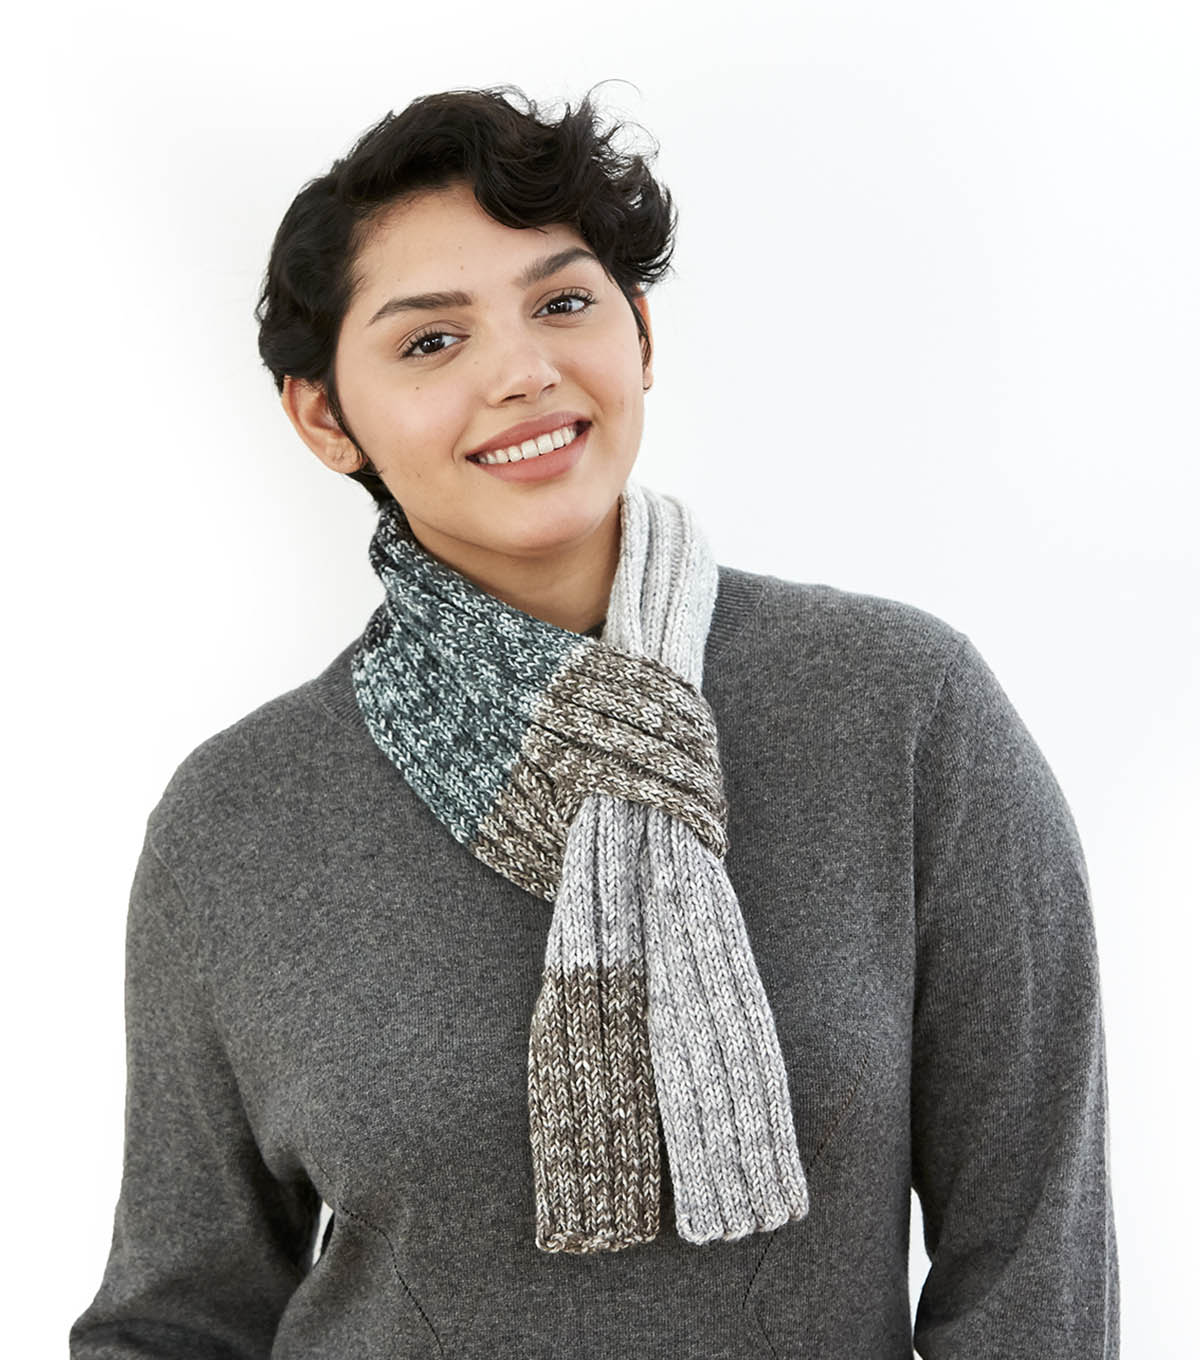 Keyhole scarf knit pattern free